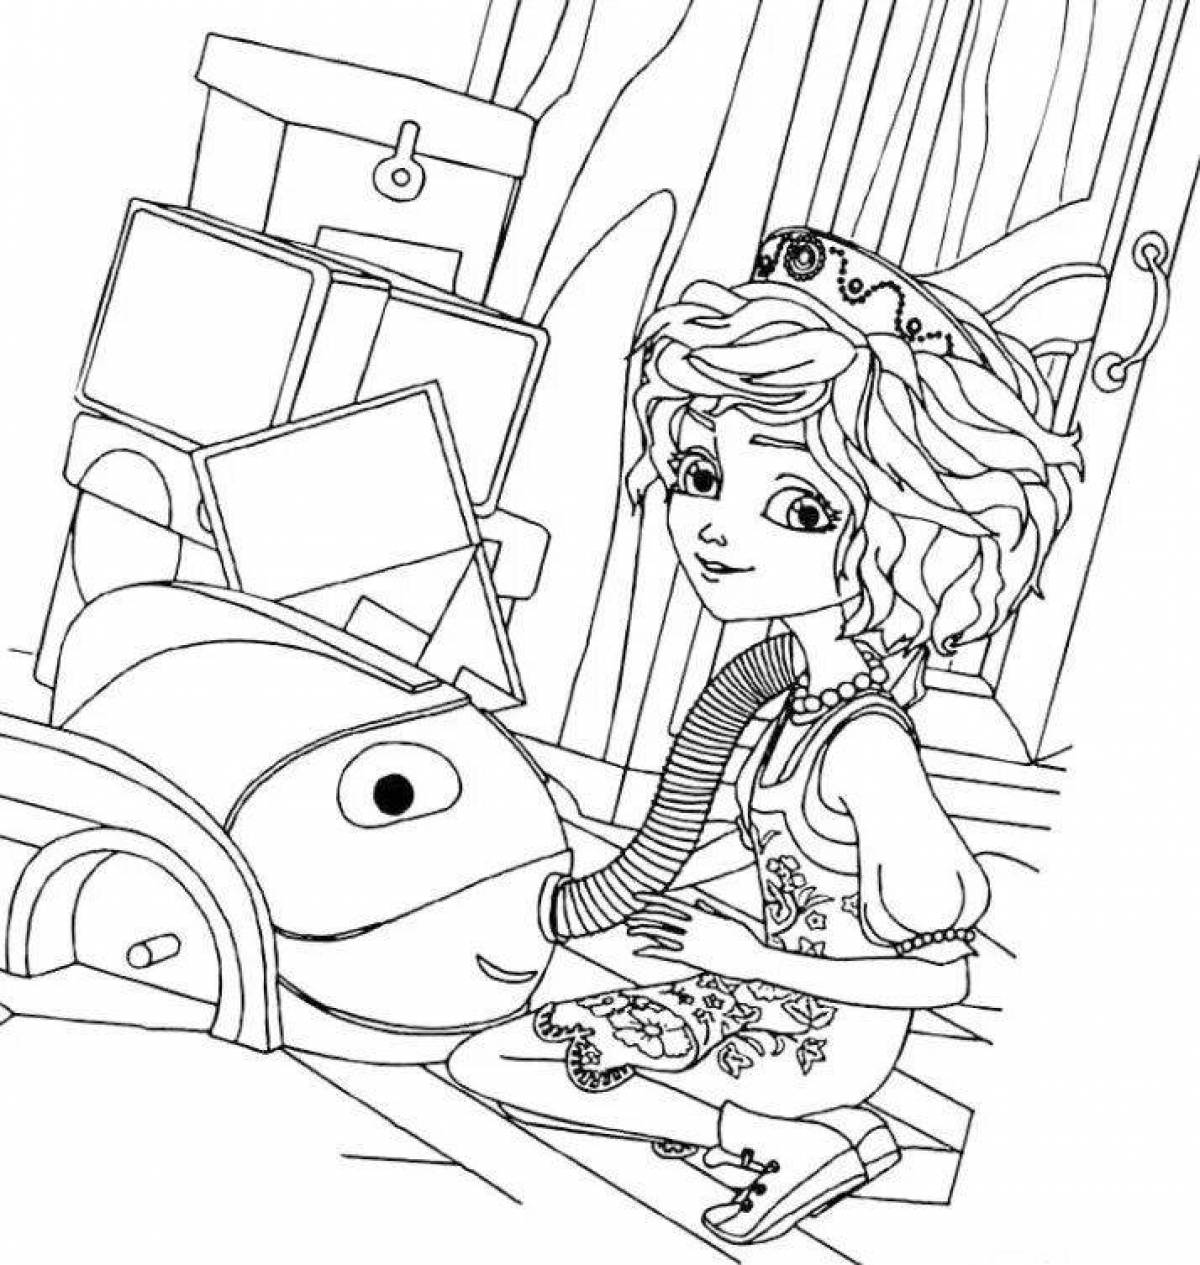 Exquisite dormice princess coloring